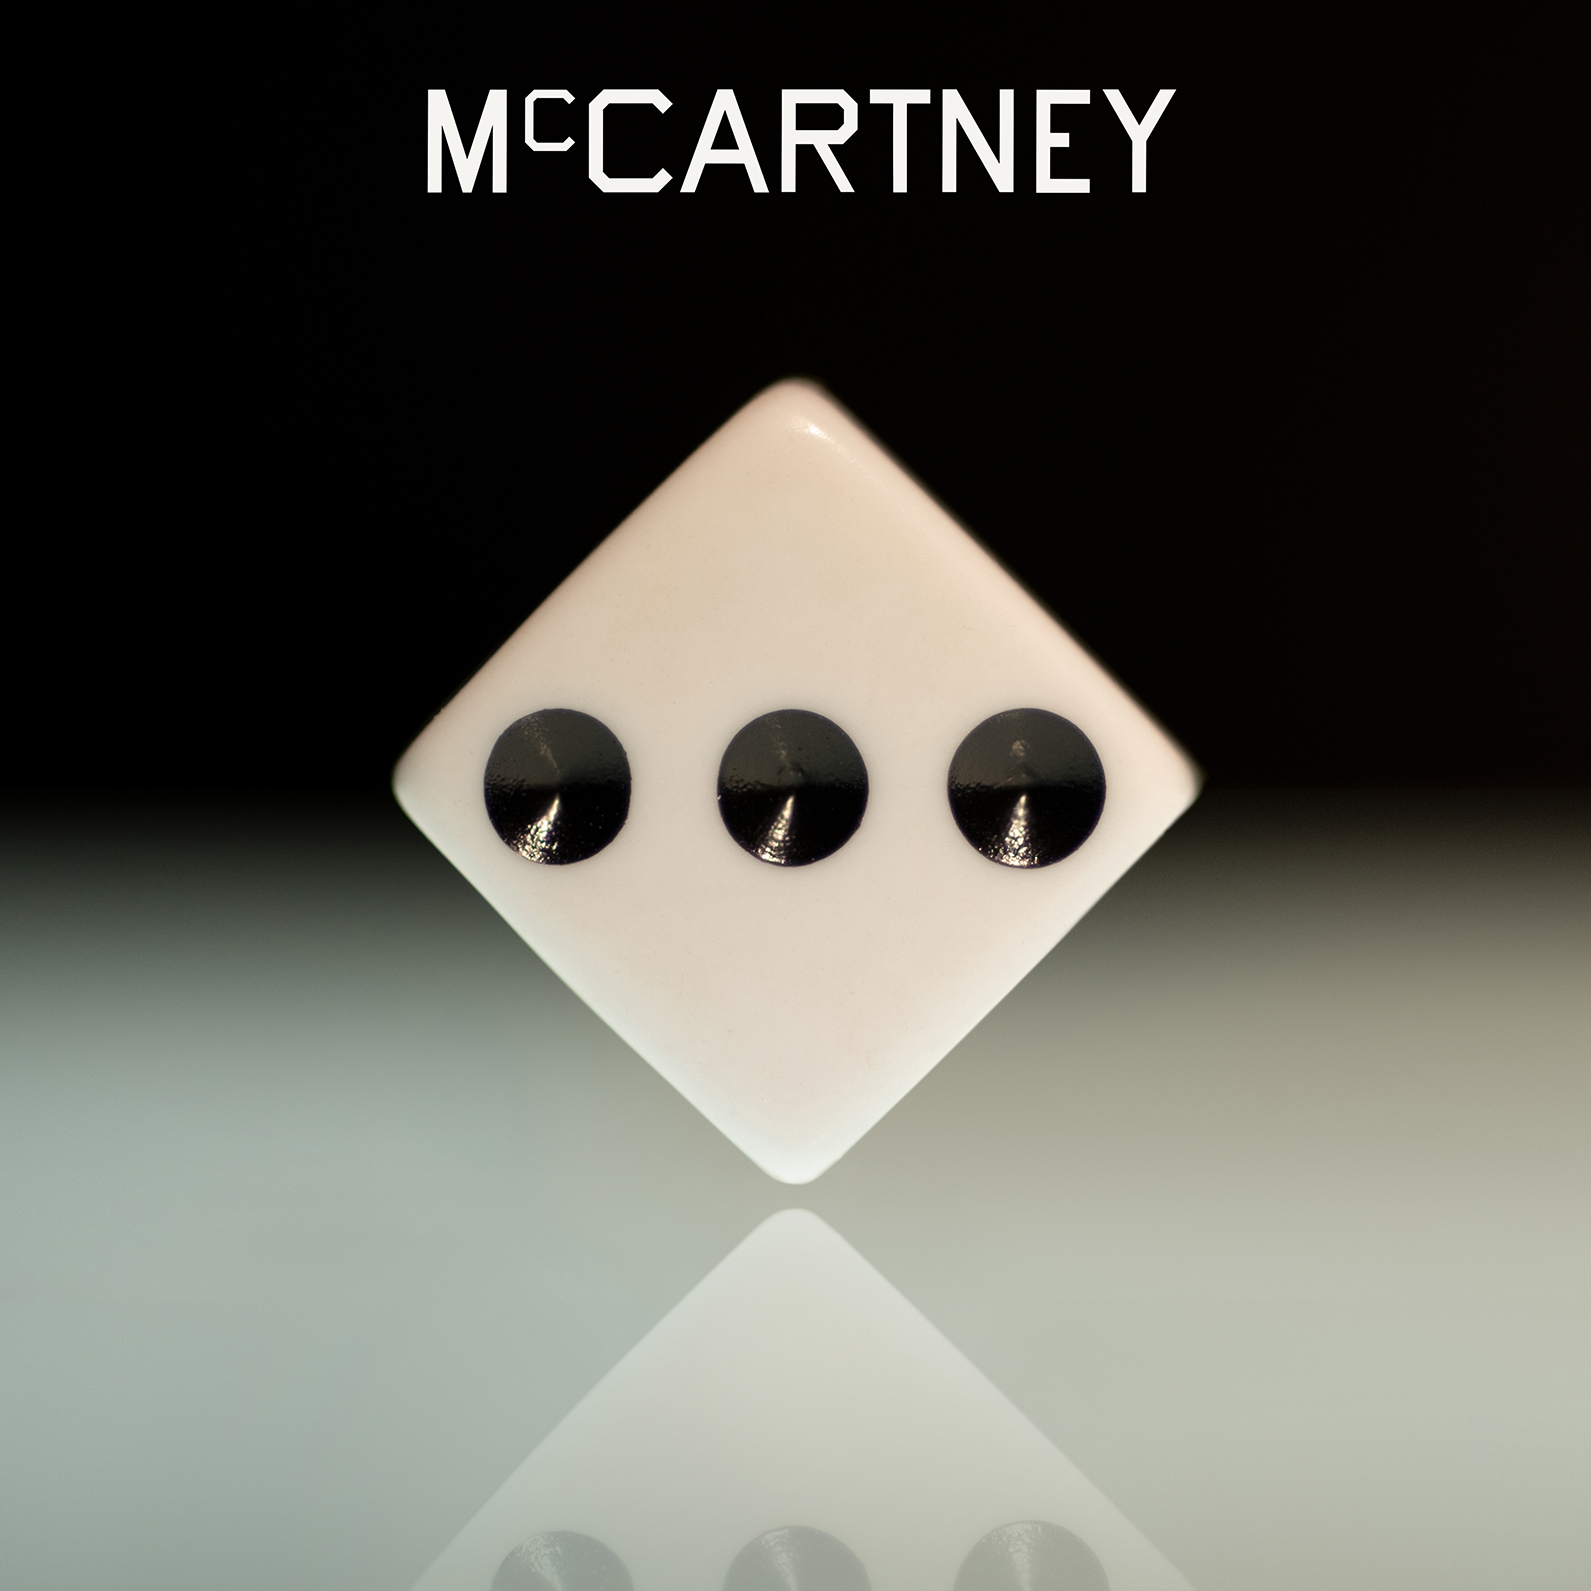 PAUL MCCARTNEY announces 'McCartney III' the third album in a trilogy of classics 1